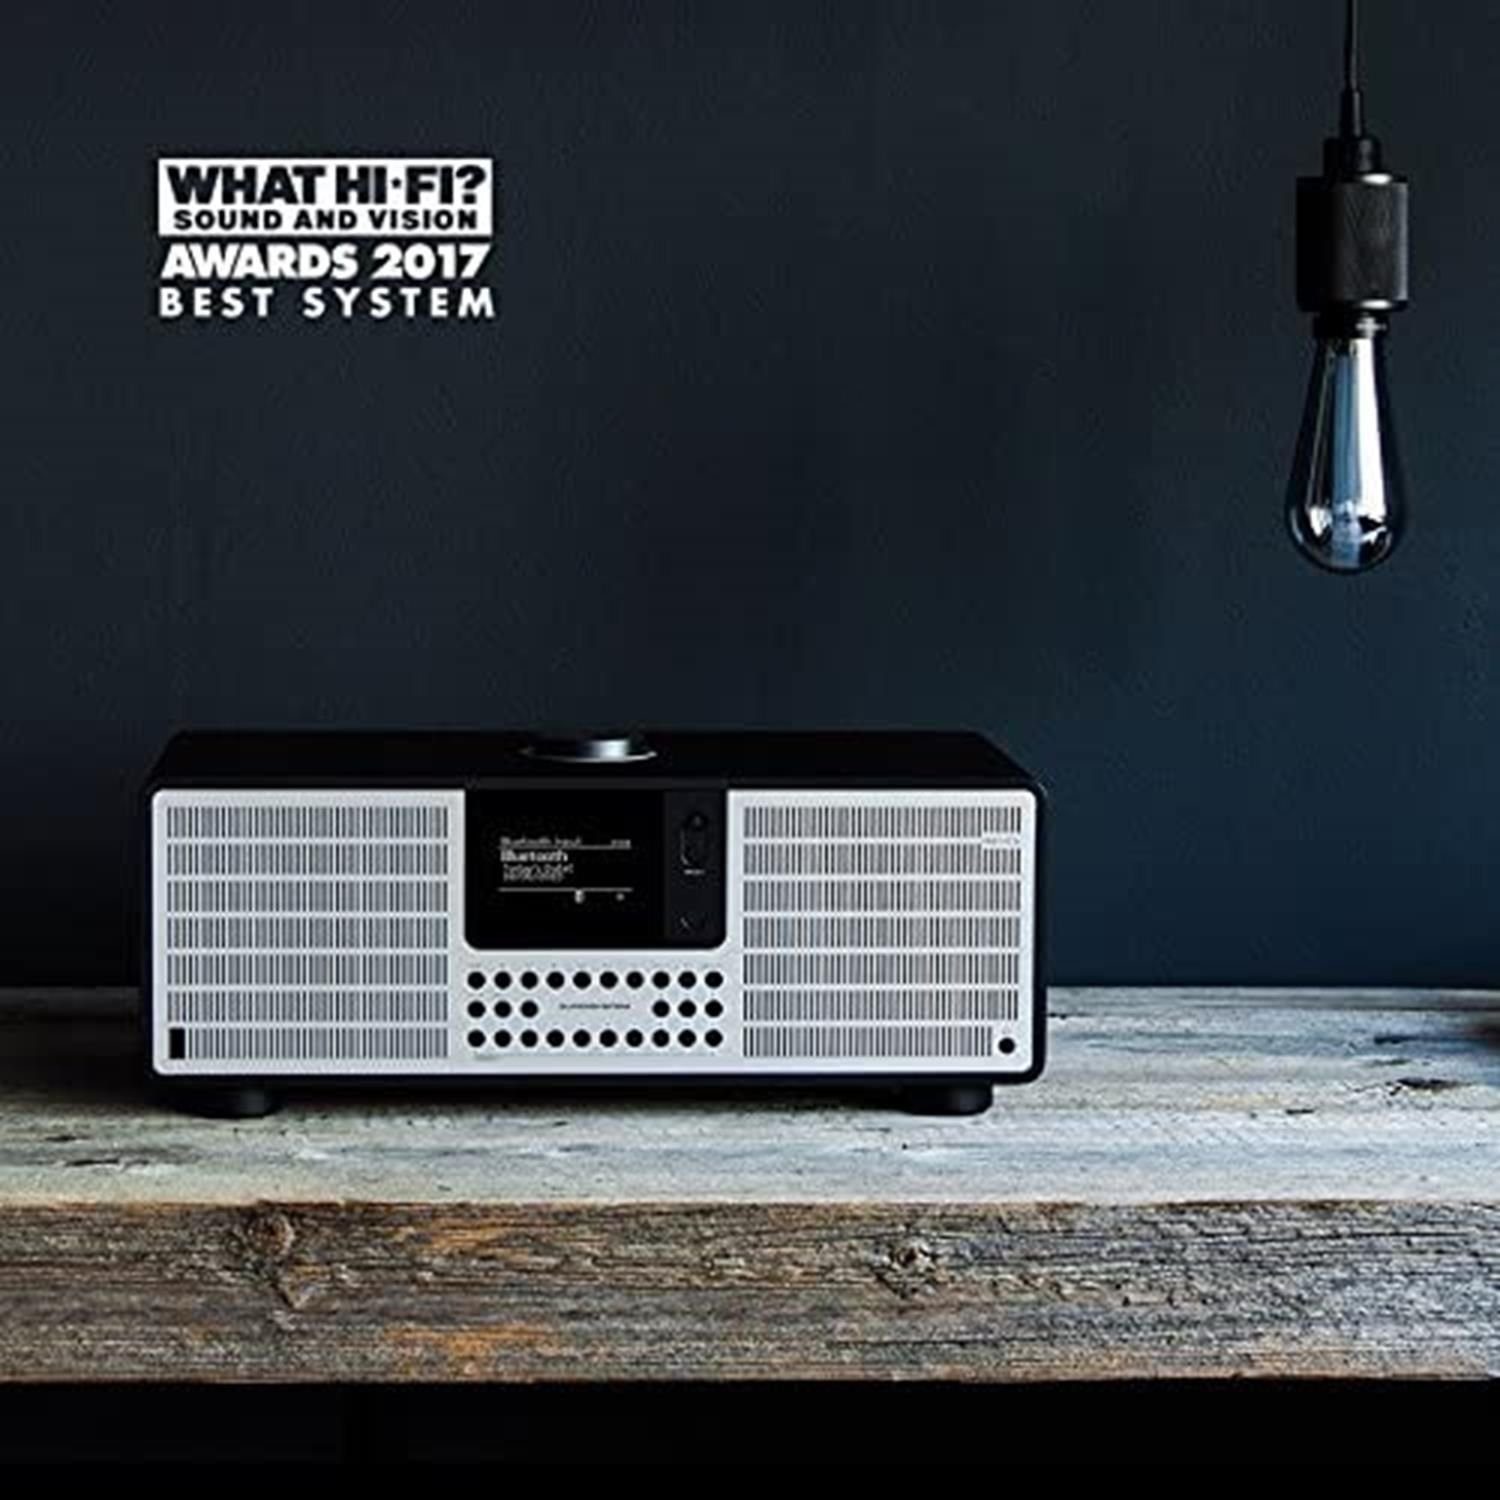 mattschwarz/silber Spotify (DAB) connect WLAN Stereoradio SuperSystem Revo Digitalradio LAN Internet-/DAB+